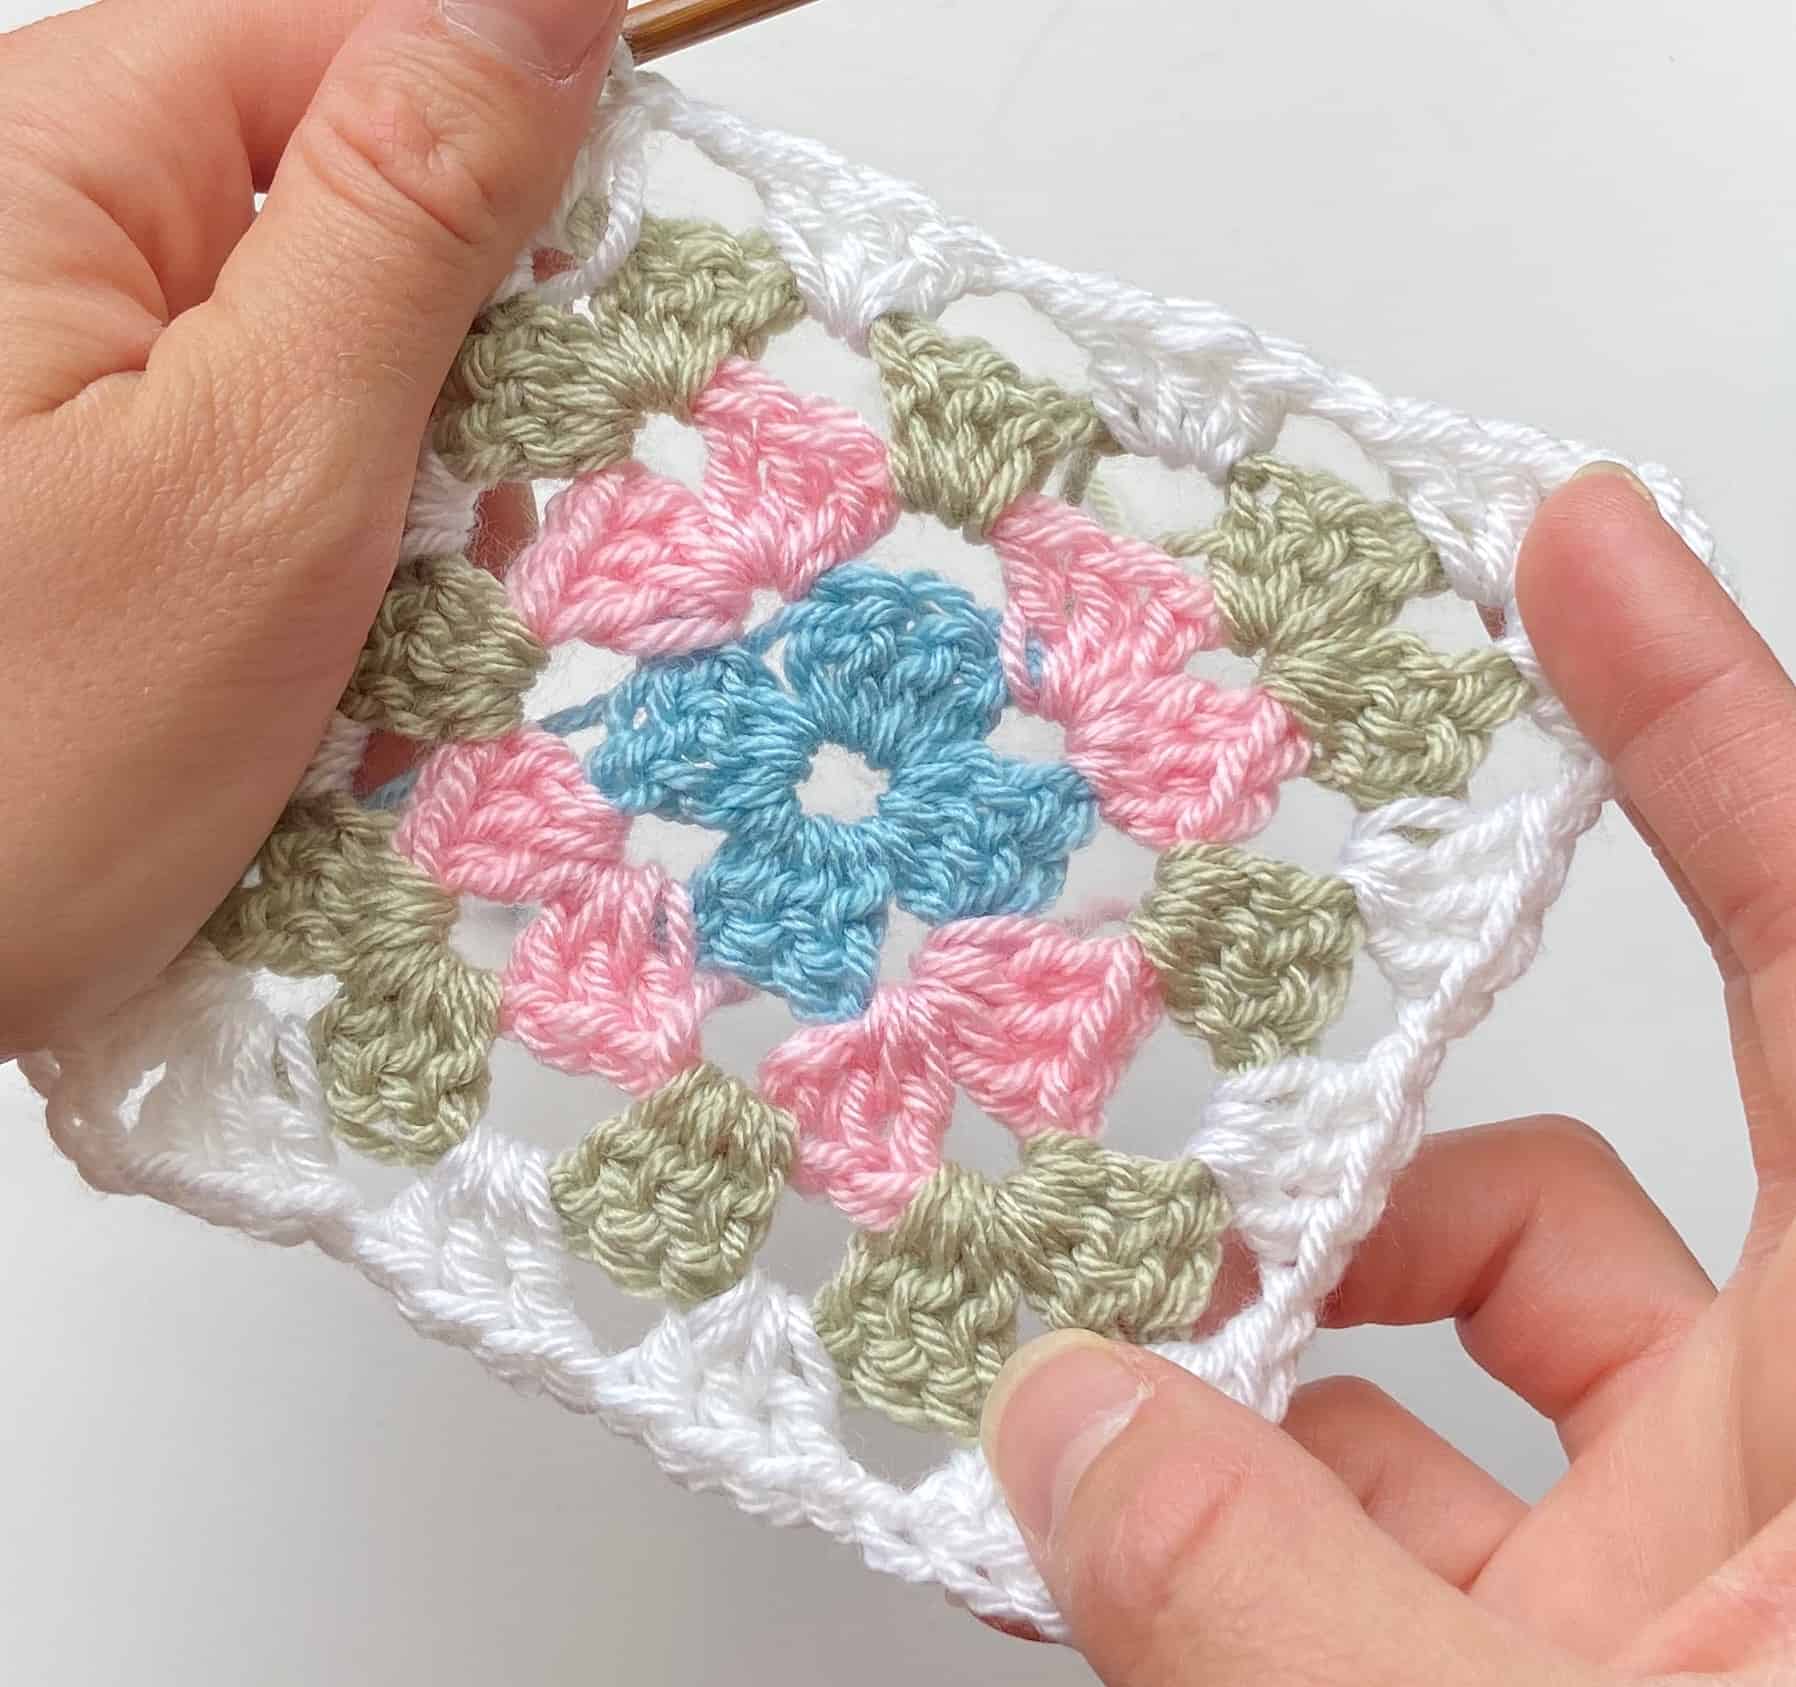 How to Crochet Granny Squares